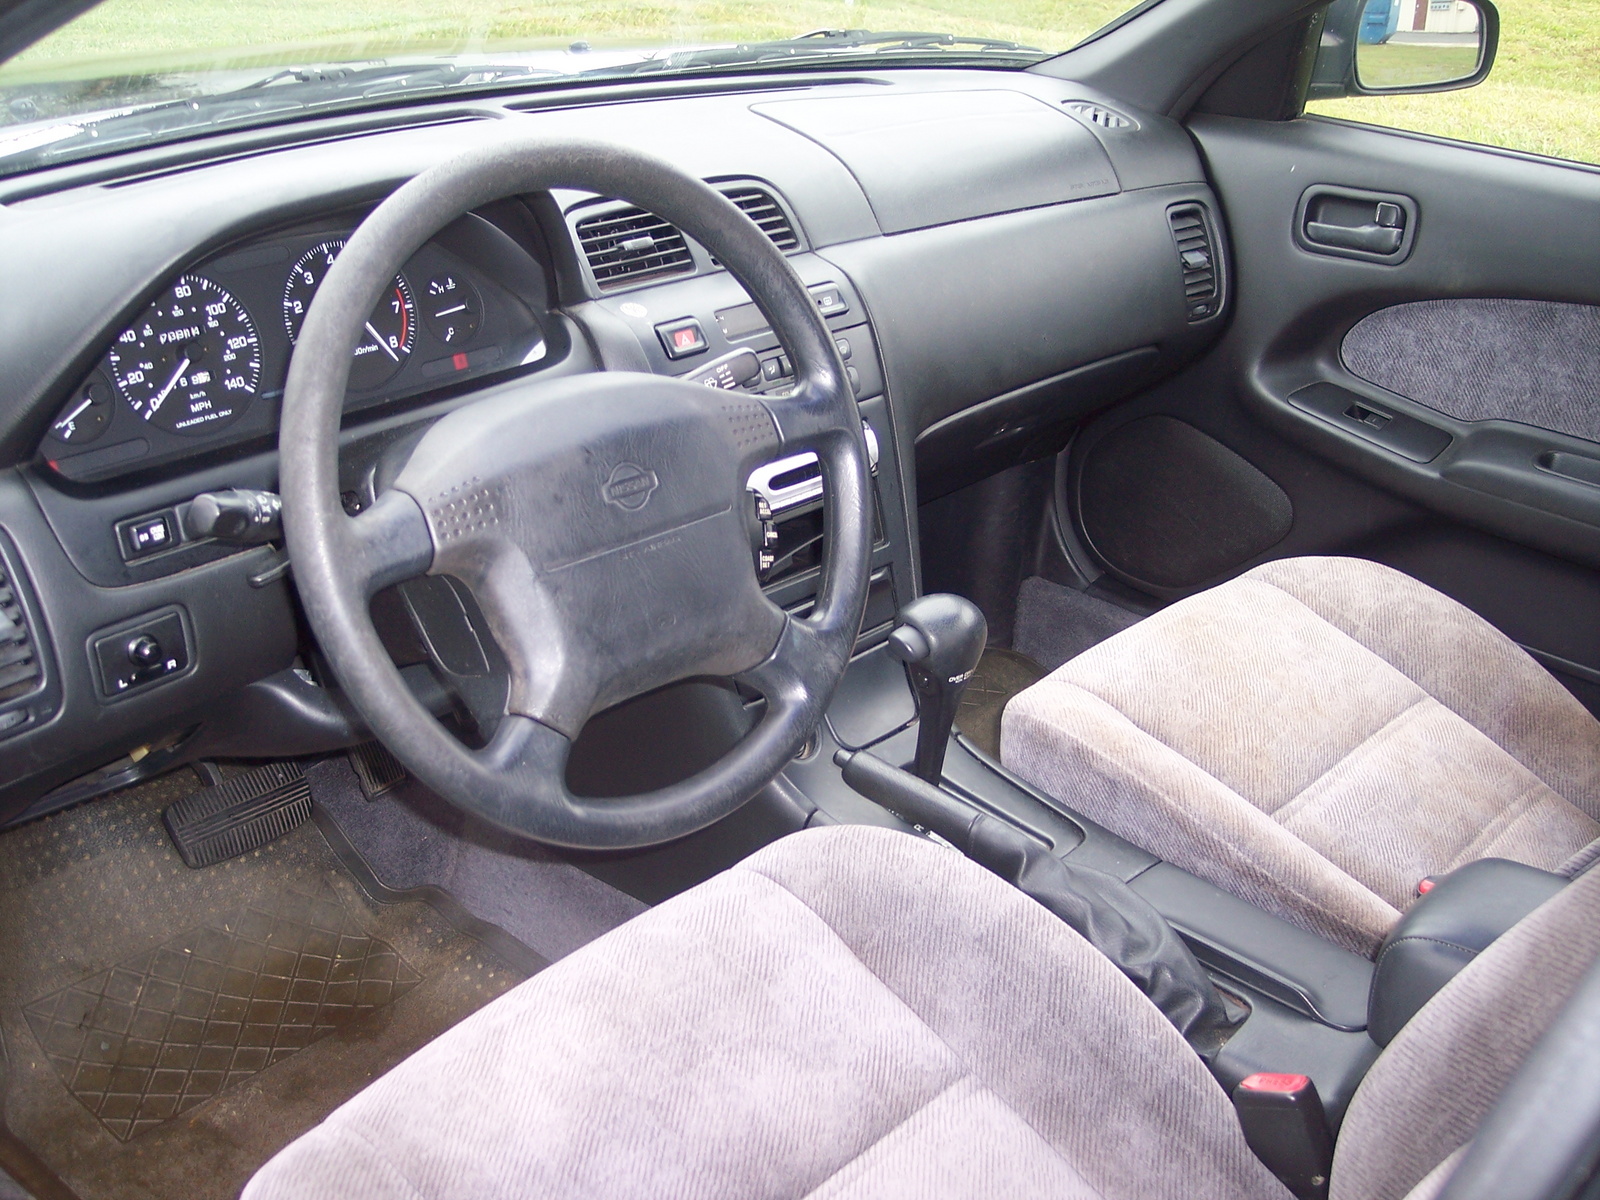 1997 Nissan maxima se interior #8